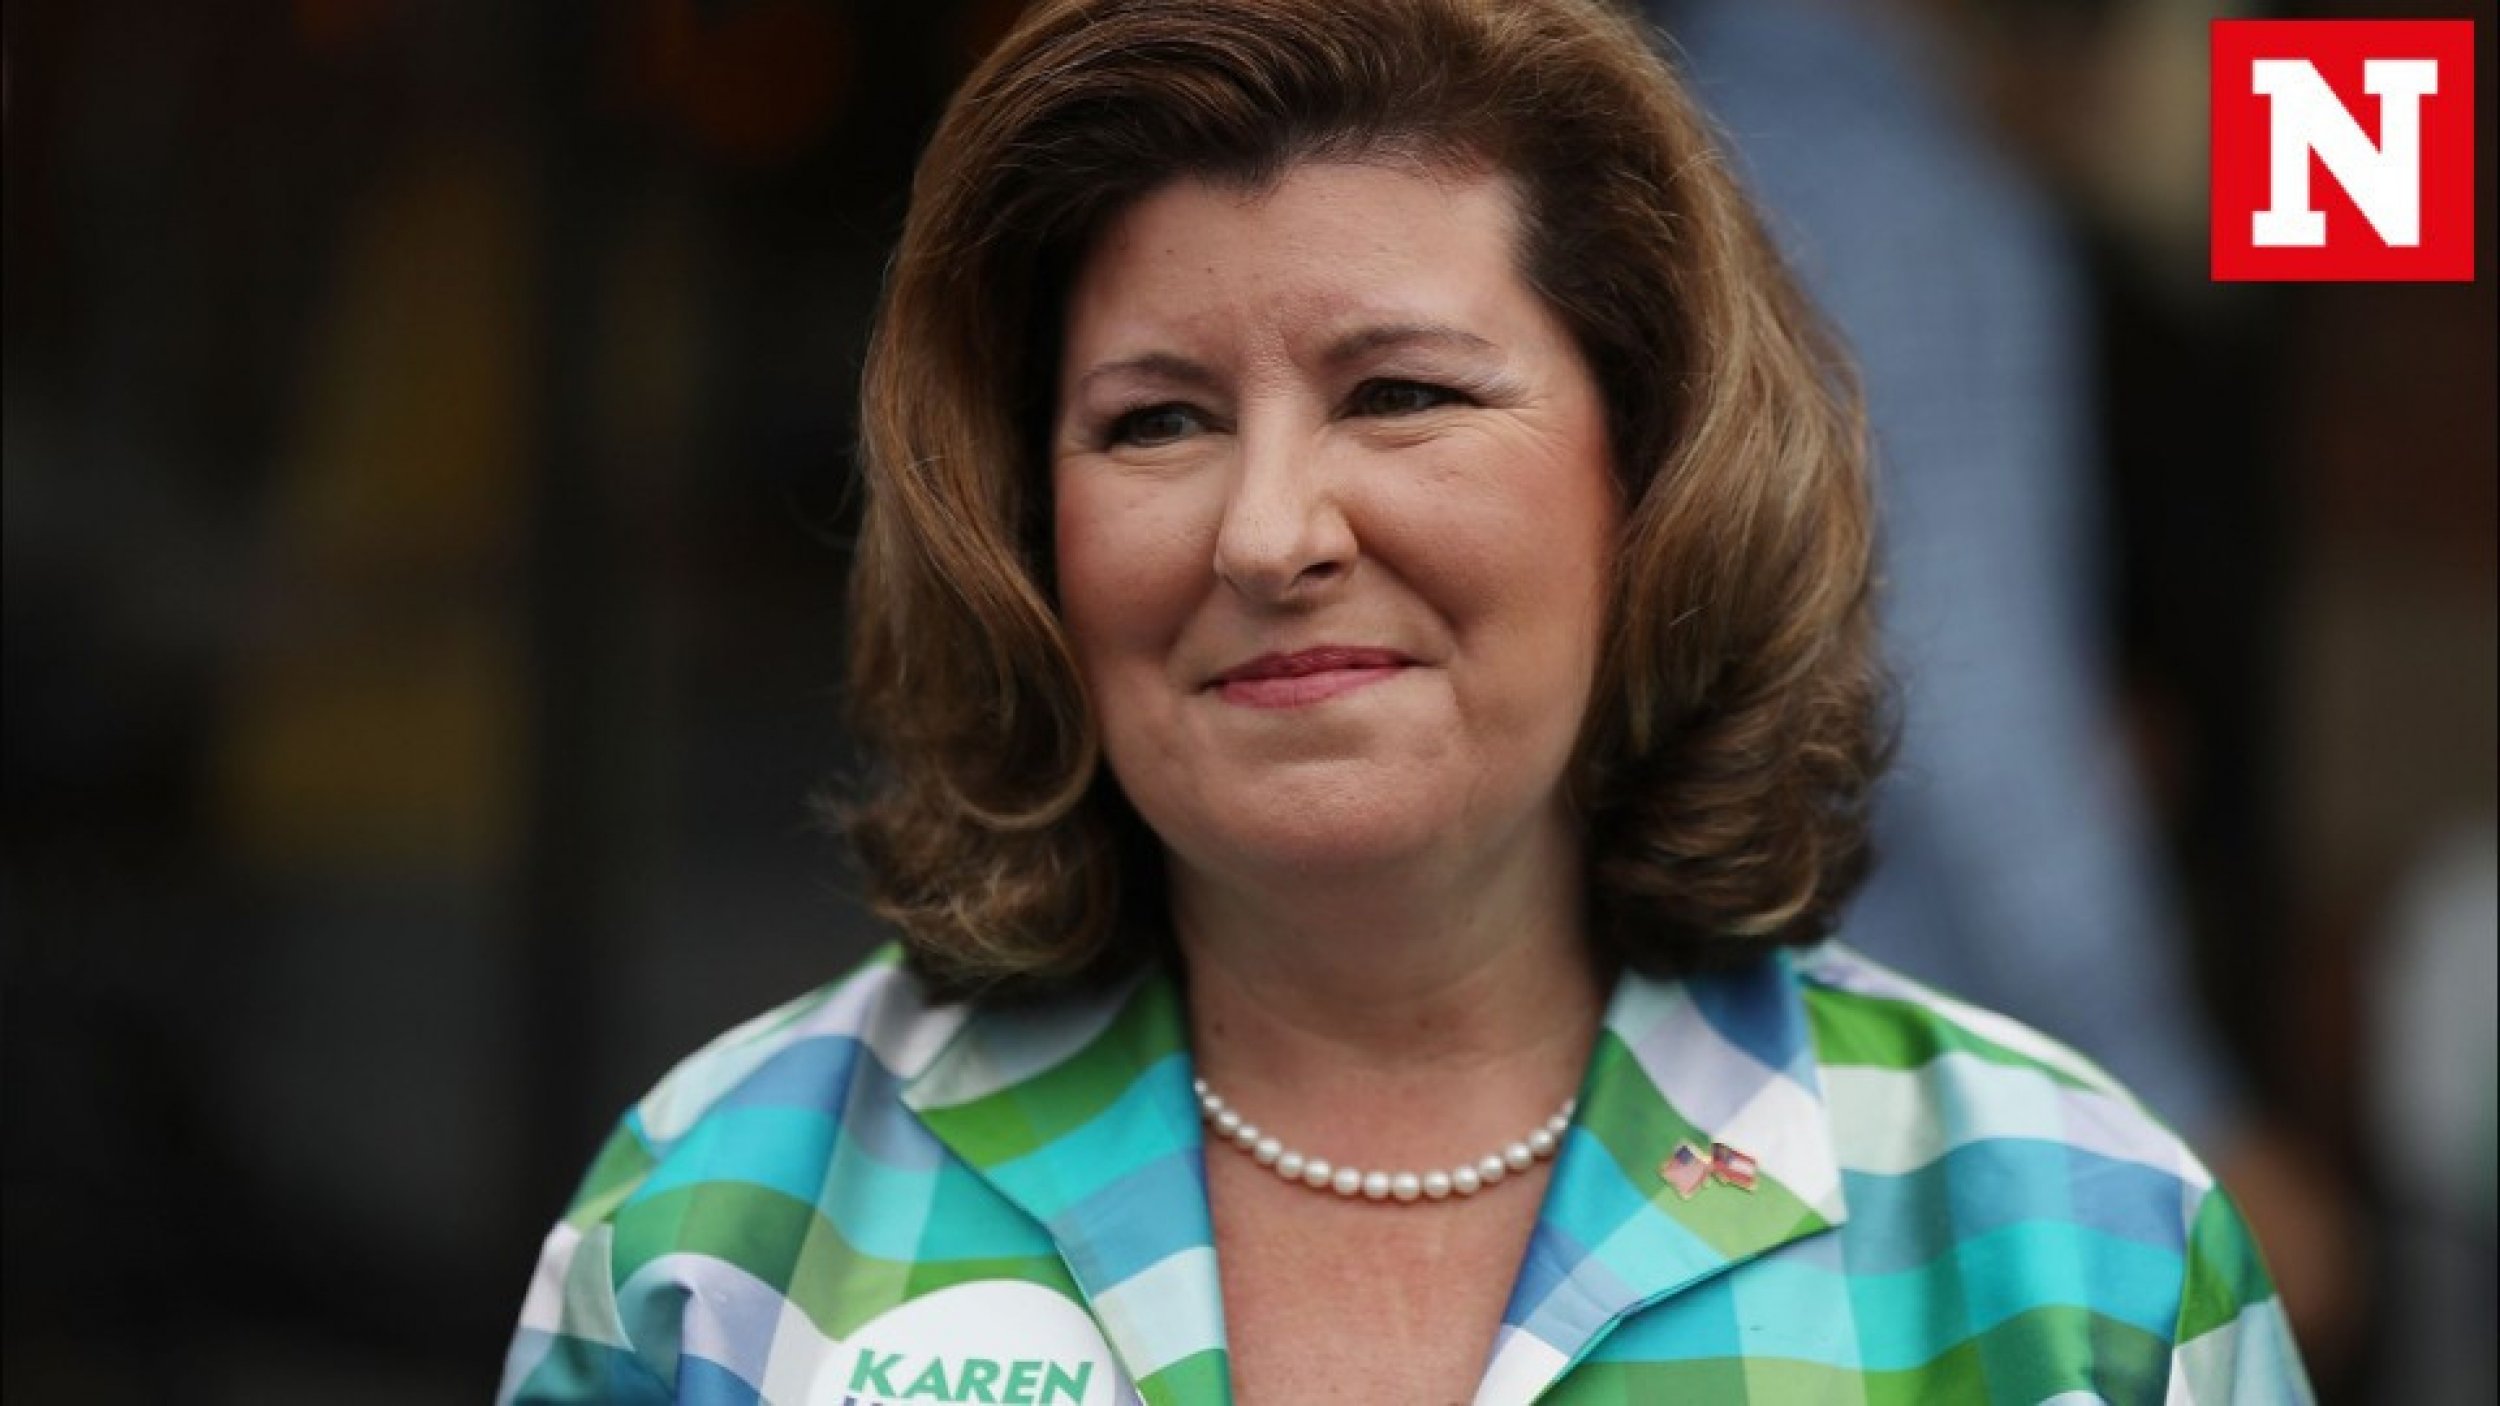 Karen Handel Wins Georgia Congressional Special Election